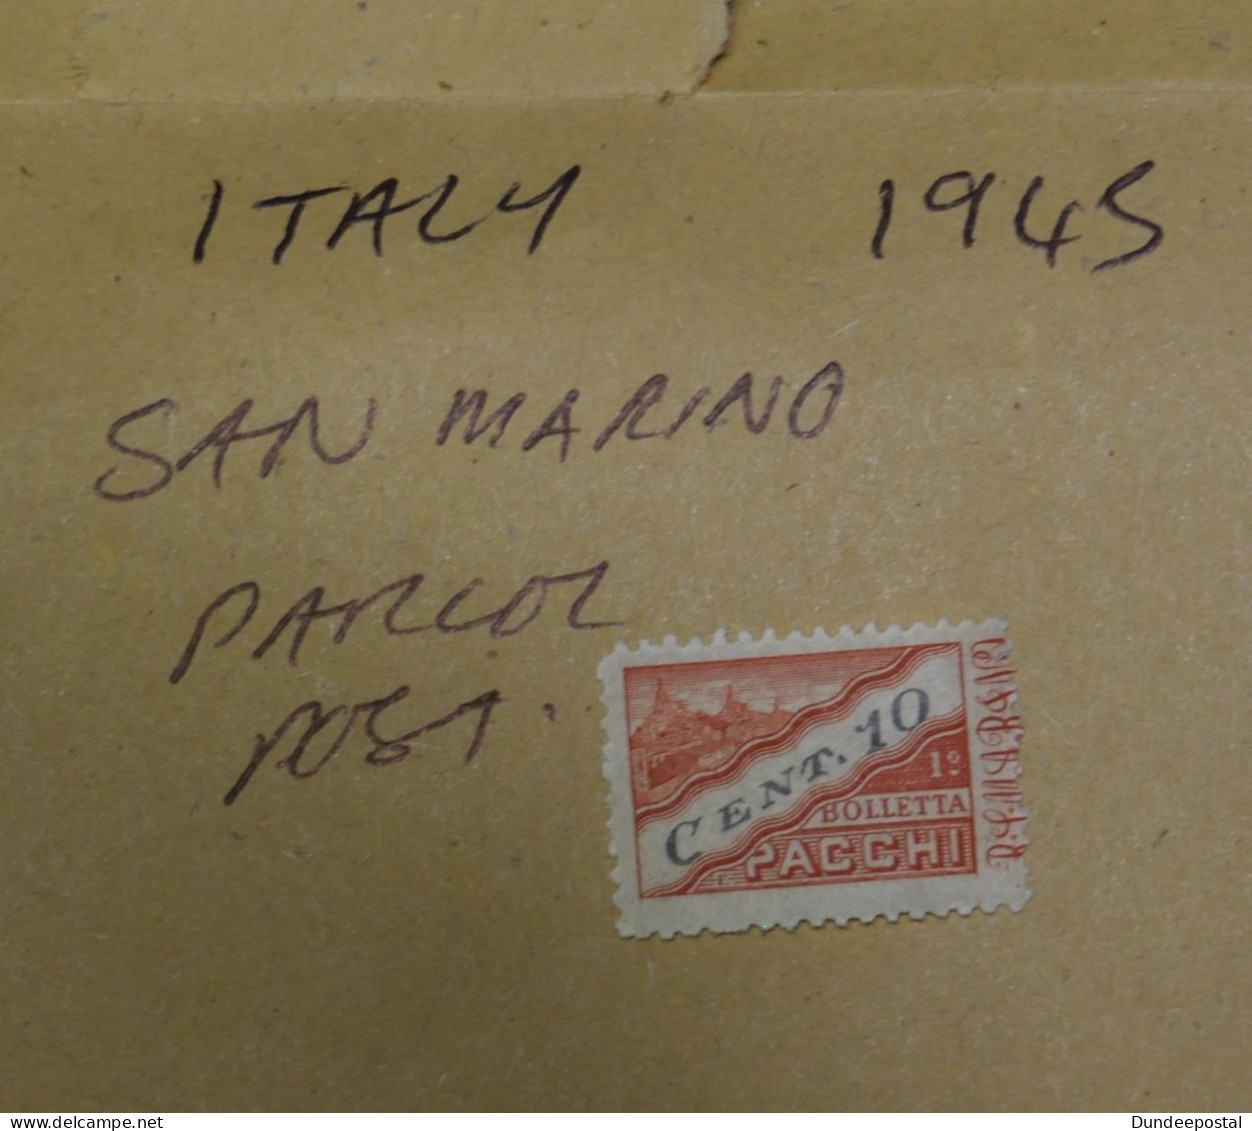 ITALY  STAMPS  San Marino Parcel Post 1945 ~~L@@K~~ - Postpaketten